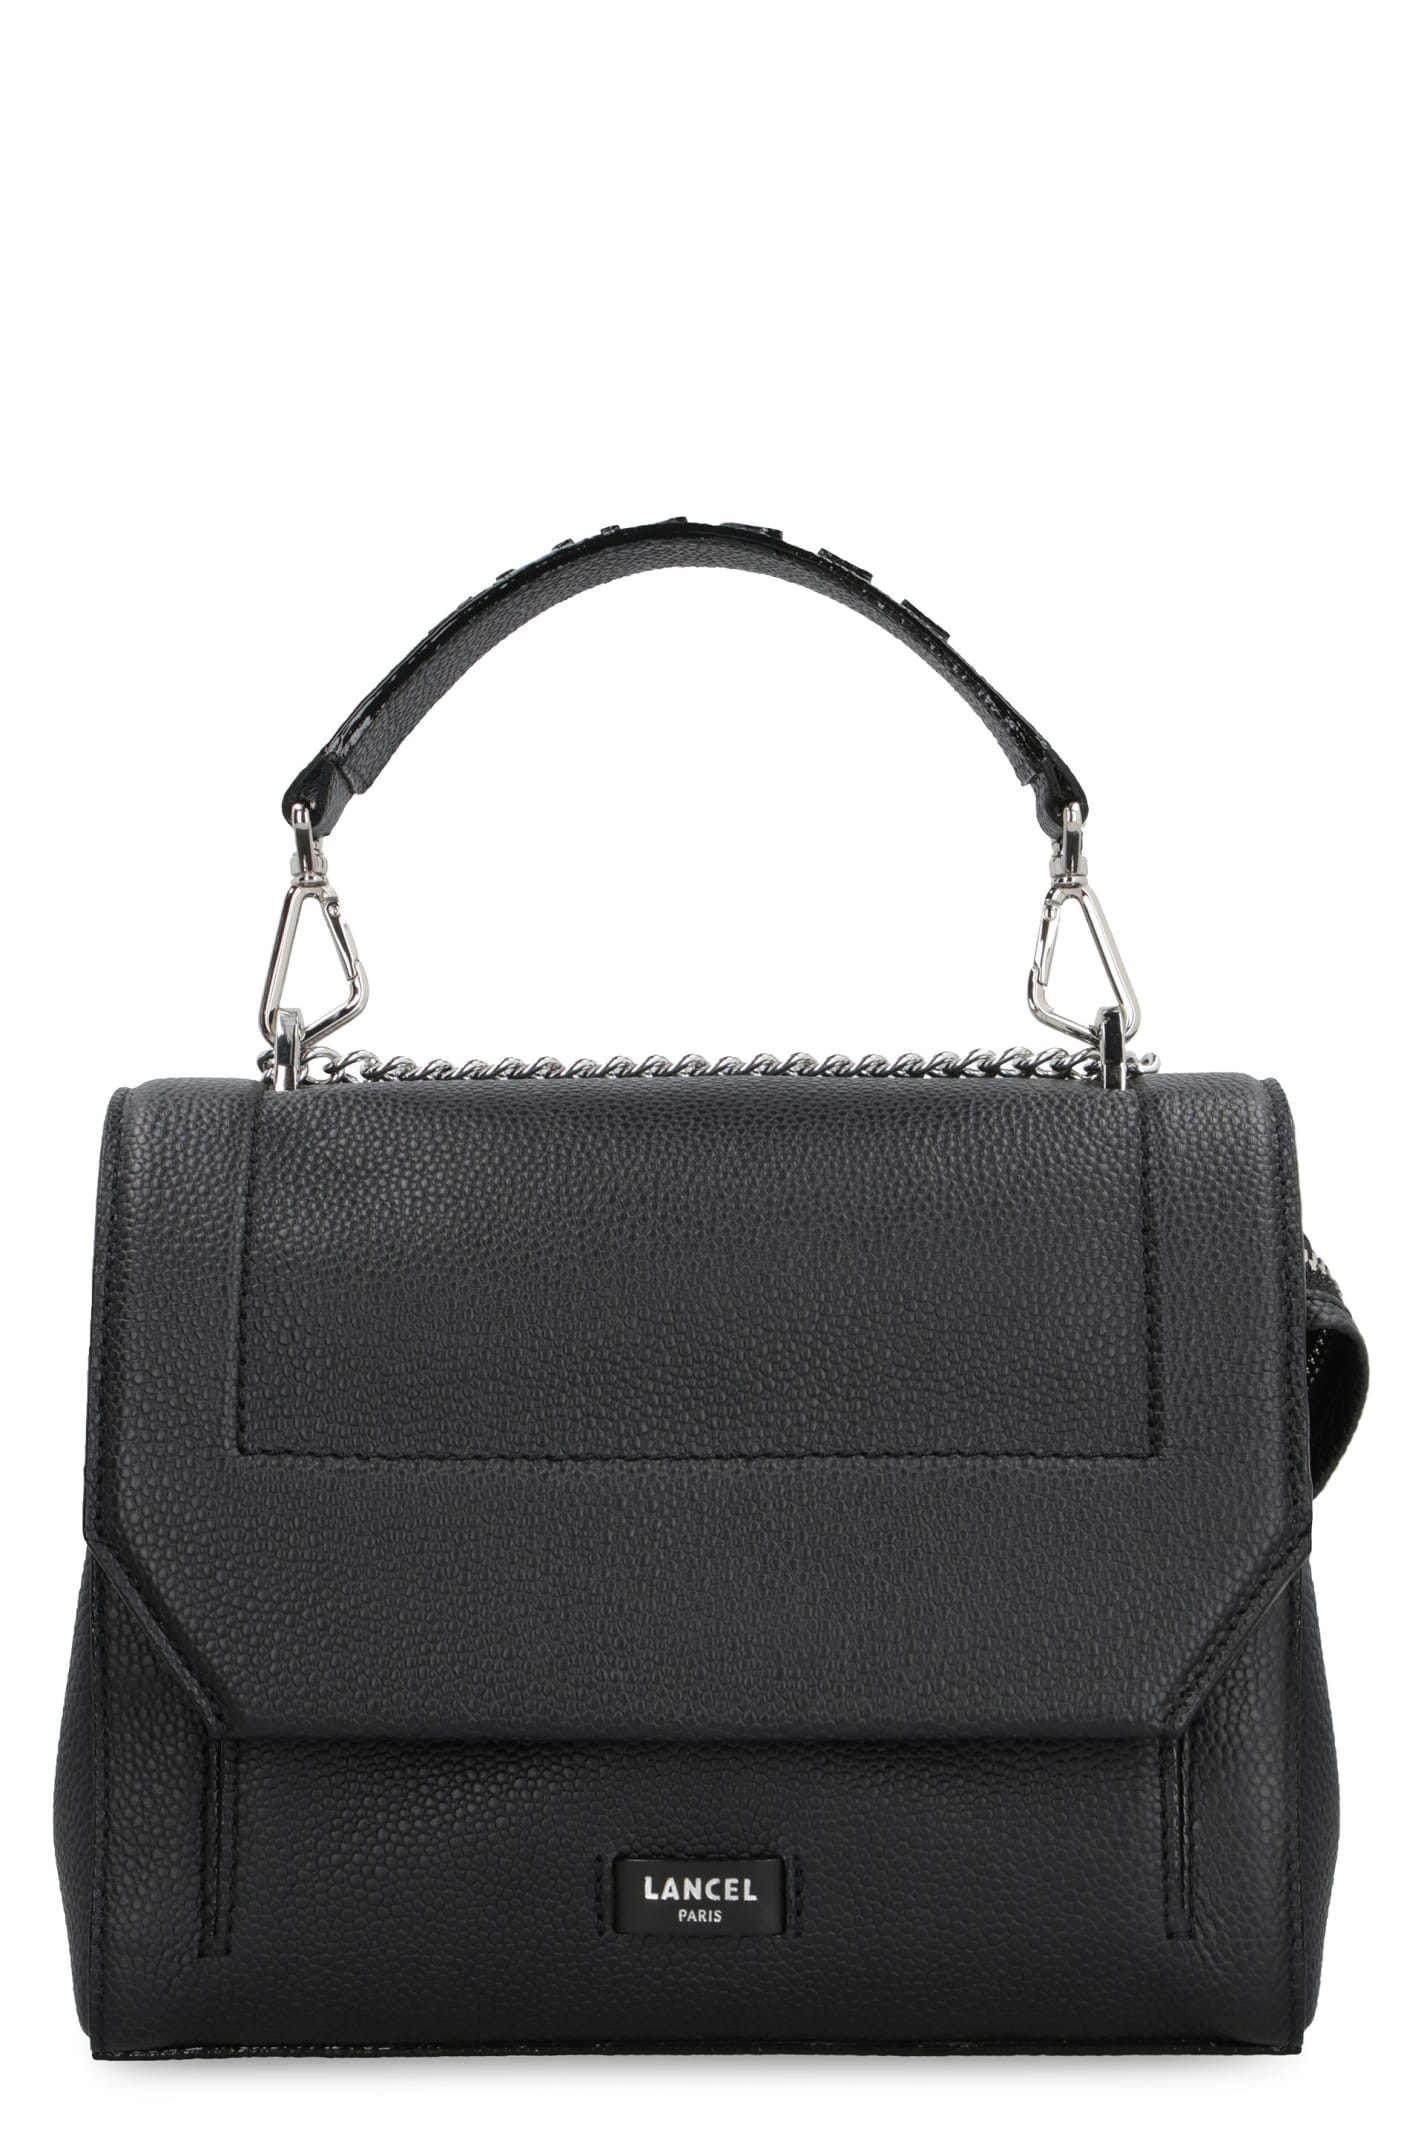 Lancel Ninon Leather Handbag In Black